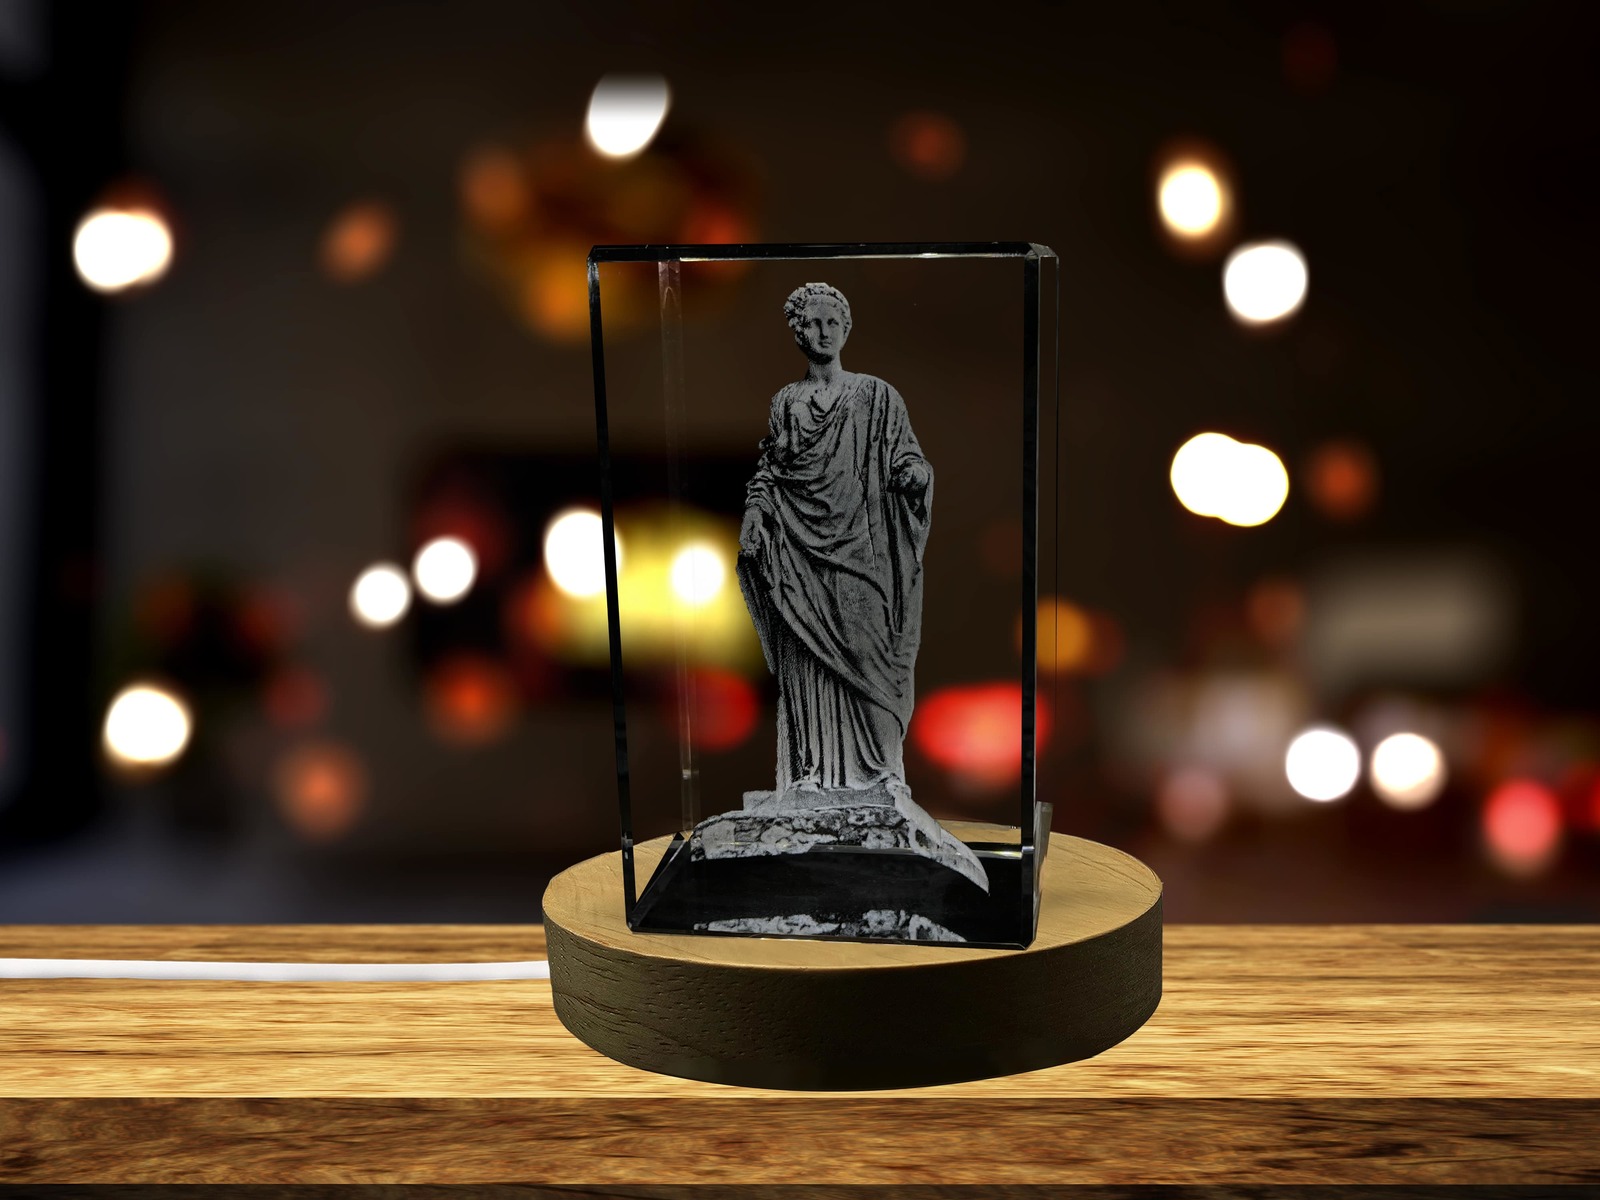 LED Base included | Demeter 3D Engraved Crystal Keepsake/Gift/Decor/Collectible - $39.99 - $399.99